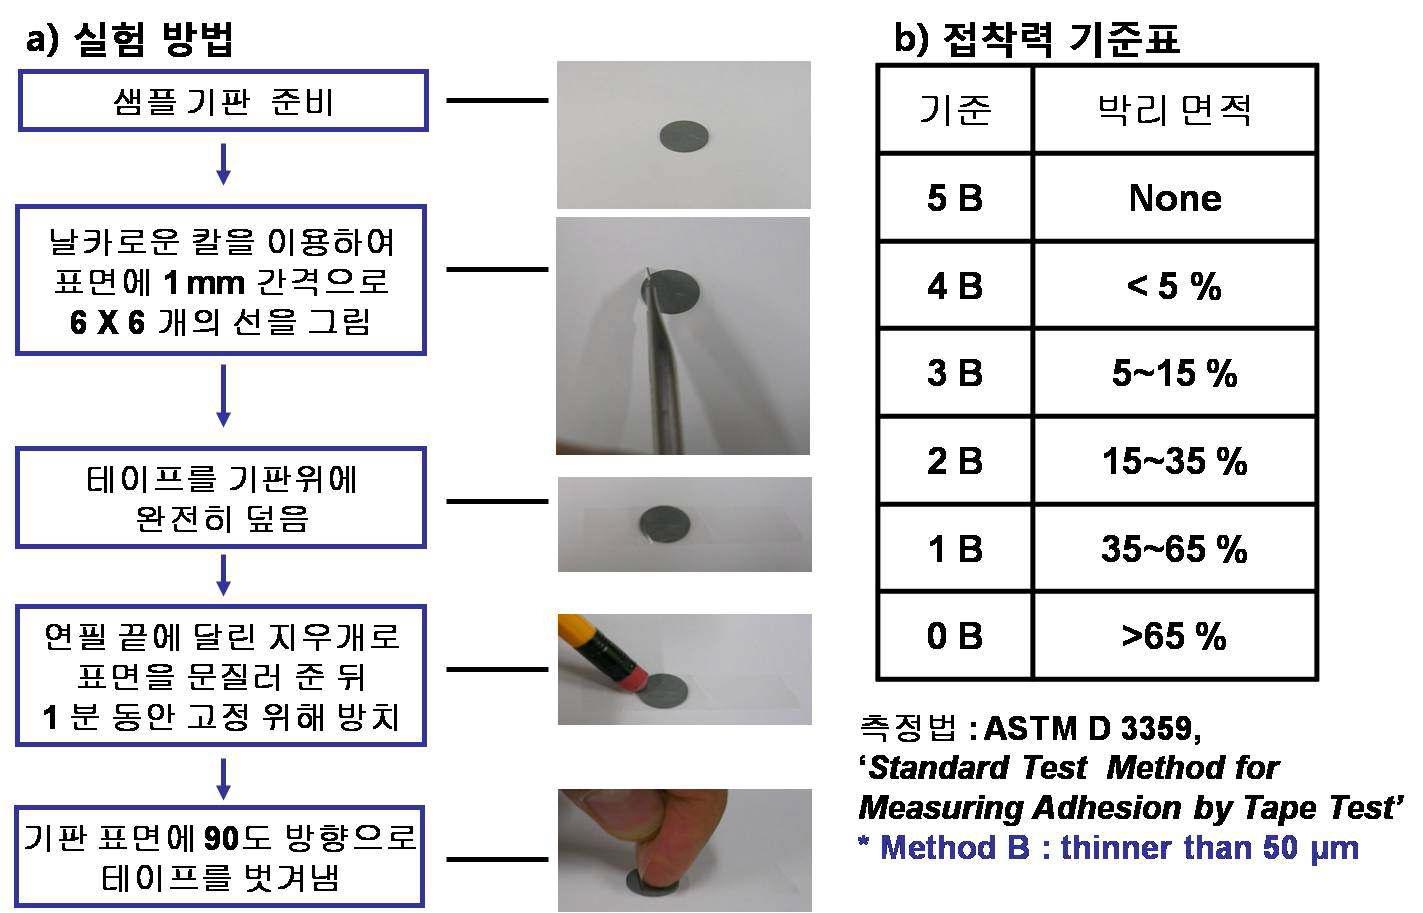 a) Tape test 실험방법 모식도 및 b) 박리면적에 따른 접착력 기준표